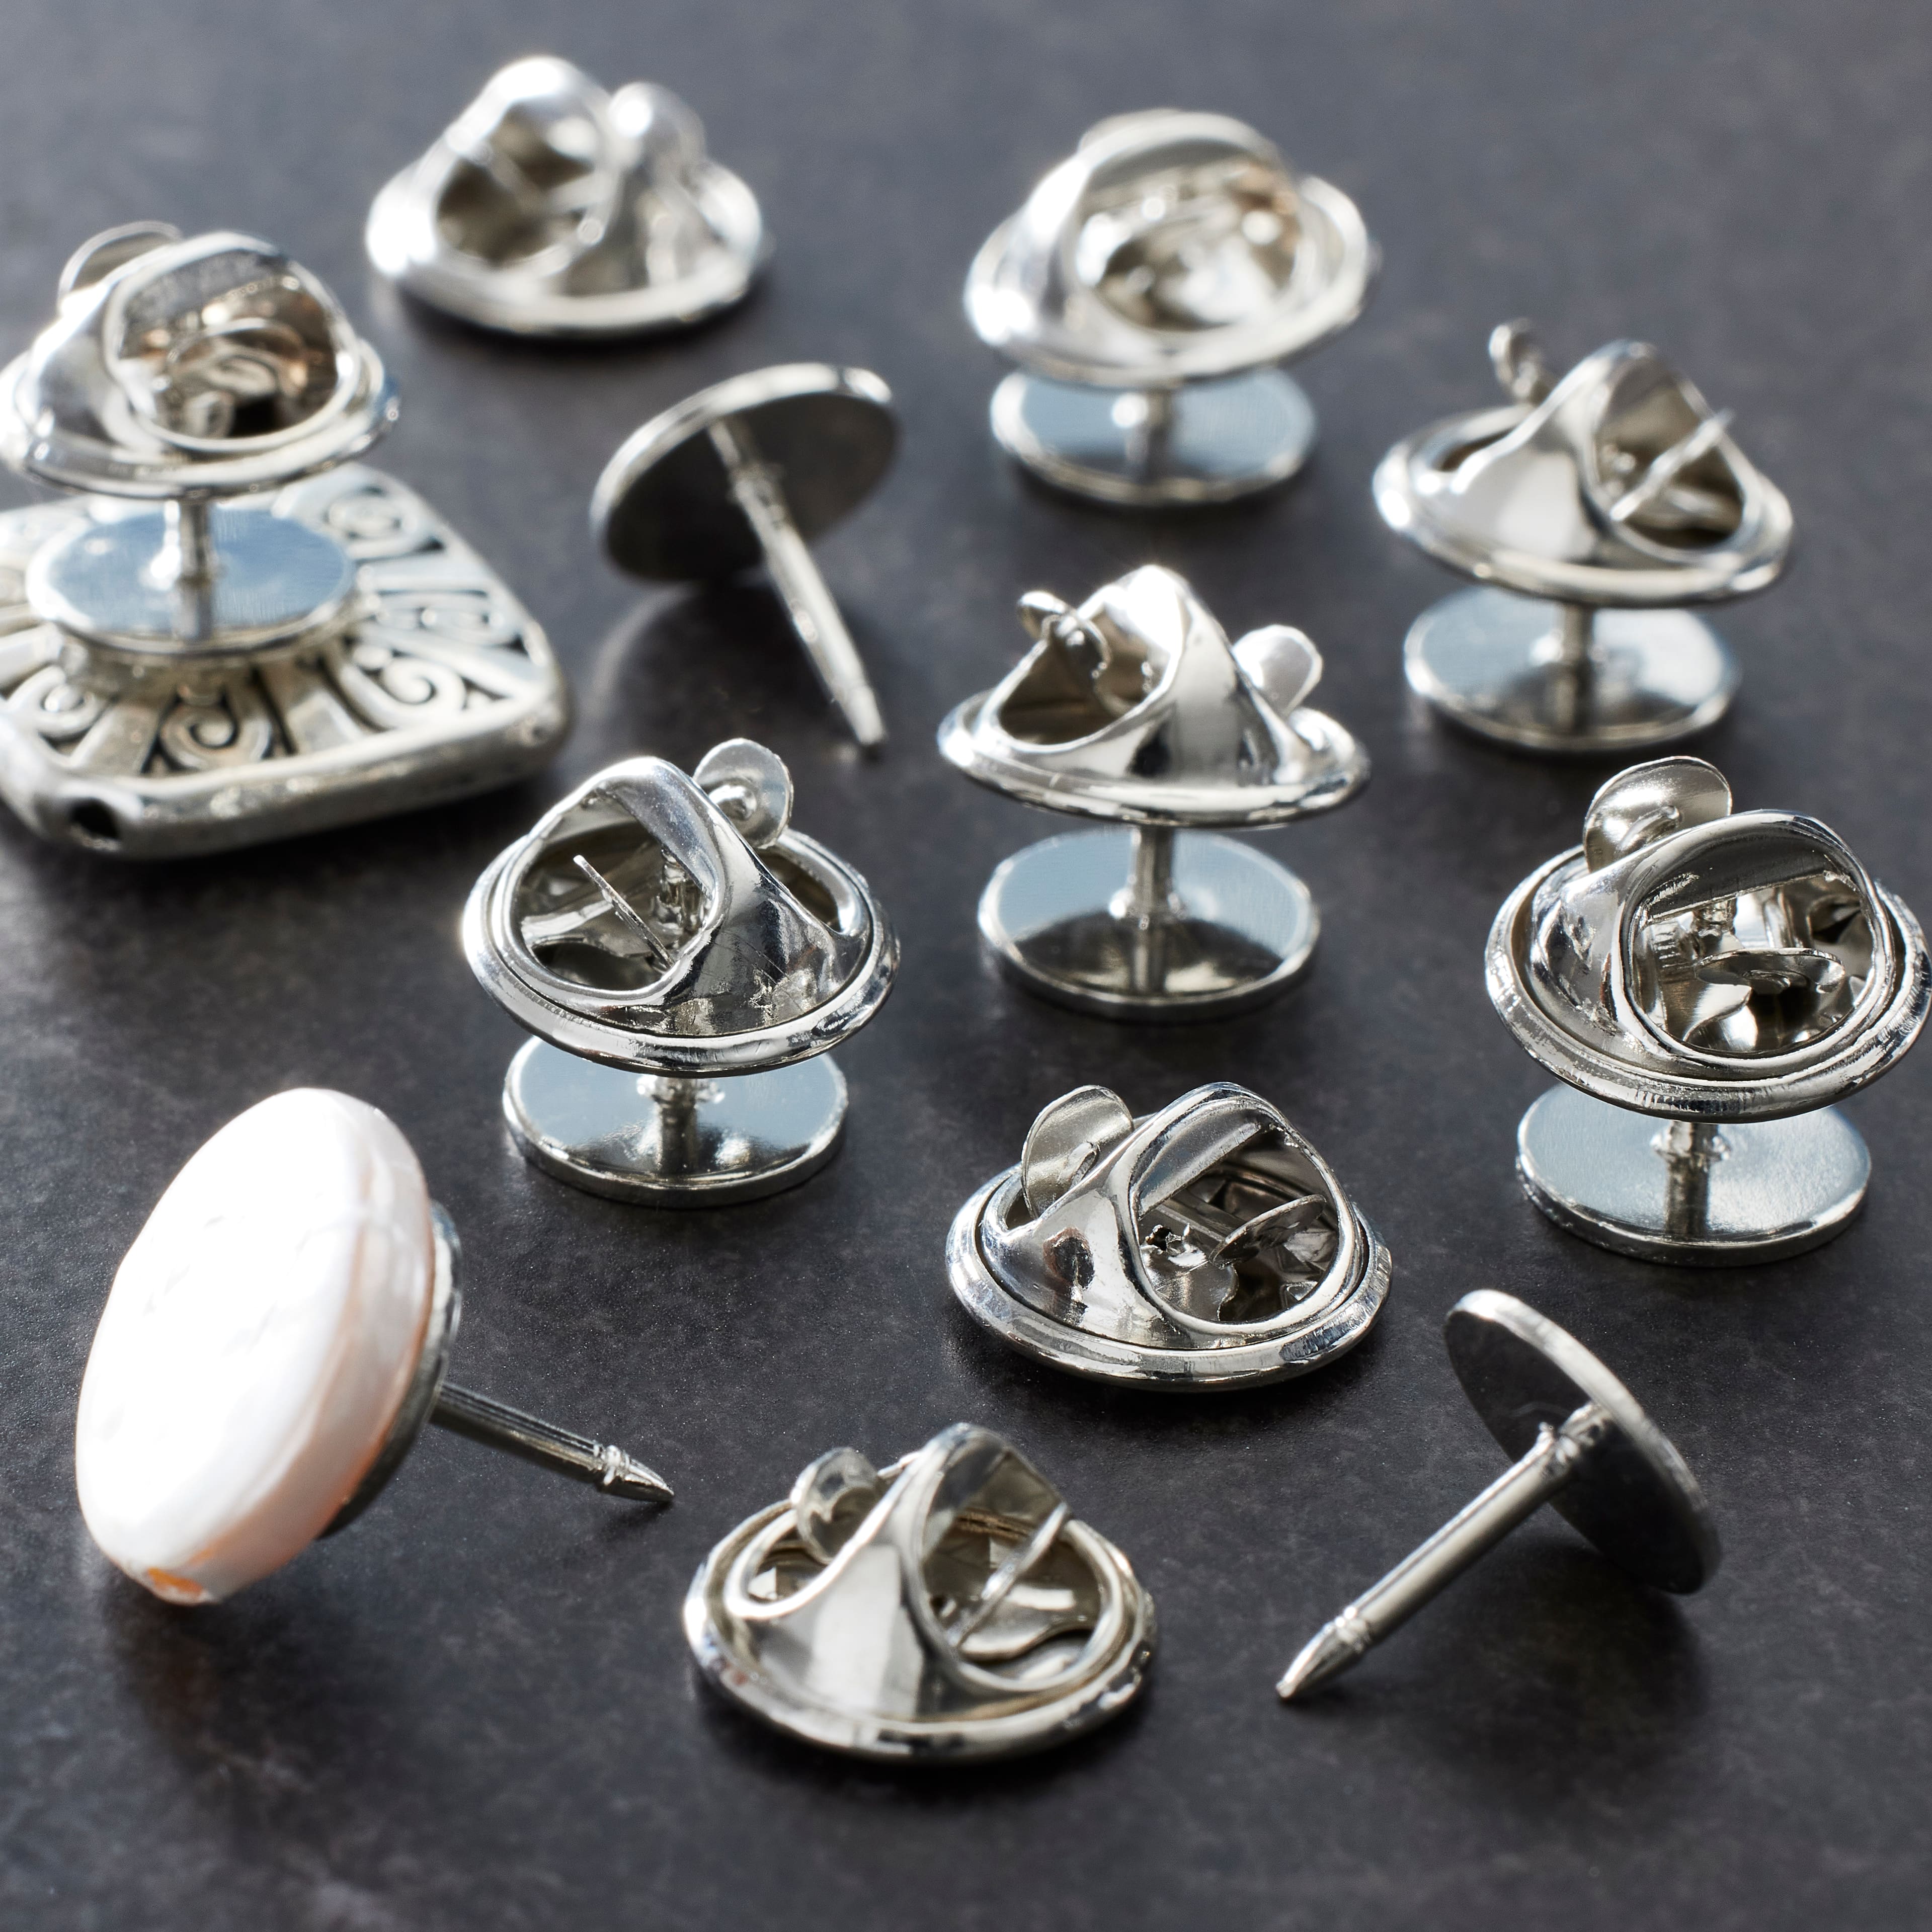 BEADNOVA 50PCS Butterfly Clutch Metal Pin Backs Pin Backings for